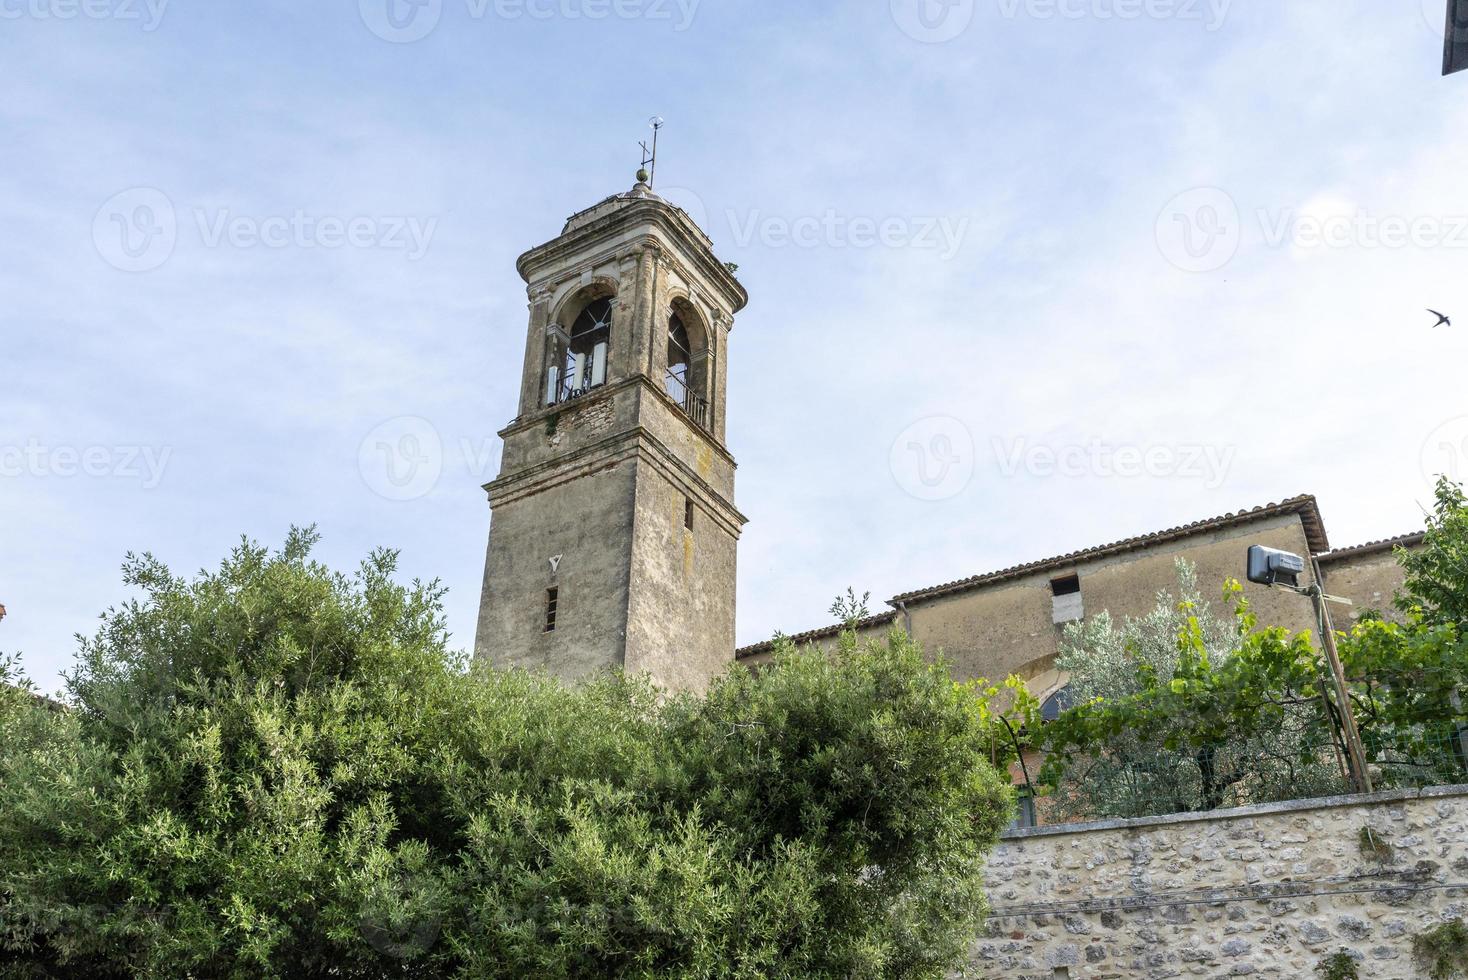 klokkentoren van santo gemini in de stad san gemini foto